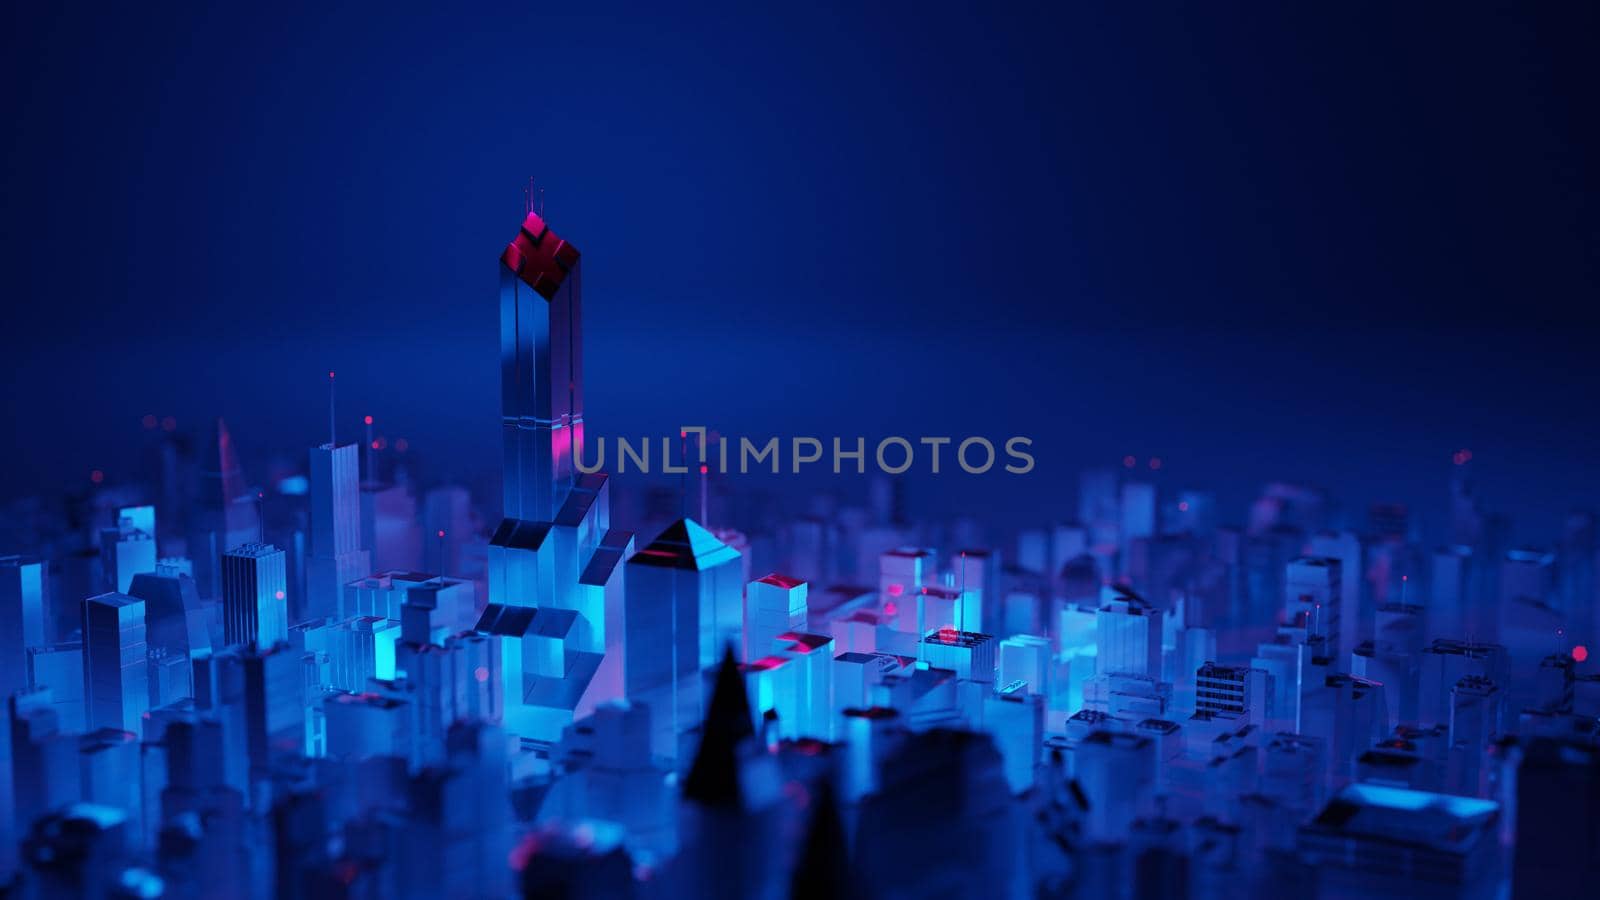 Futuristic city skyline at night with neon cyberpunk aesthetic. Digital 3D render. by hernan_hyper